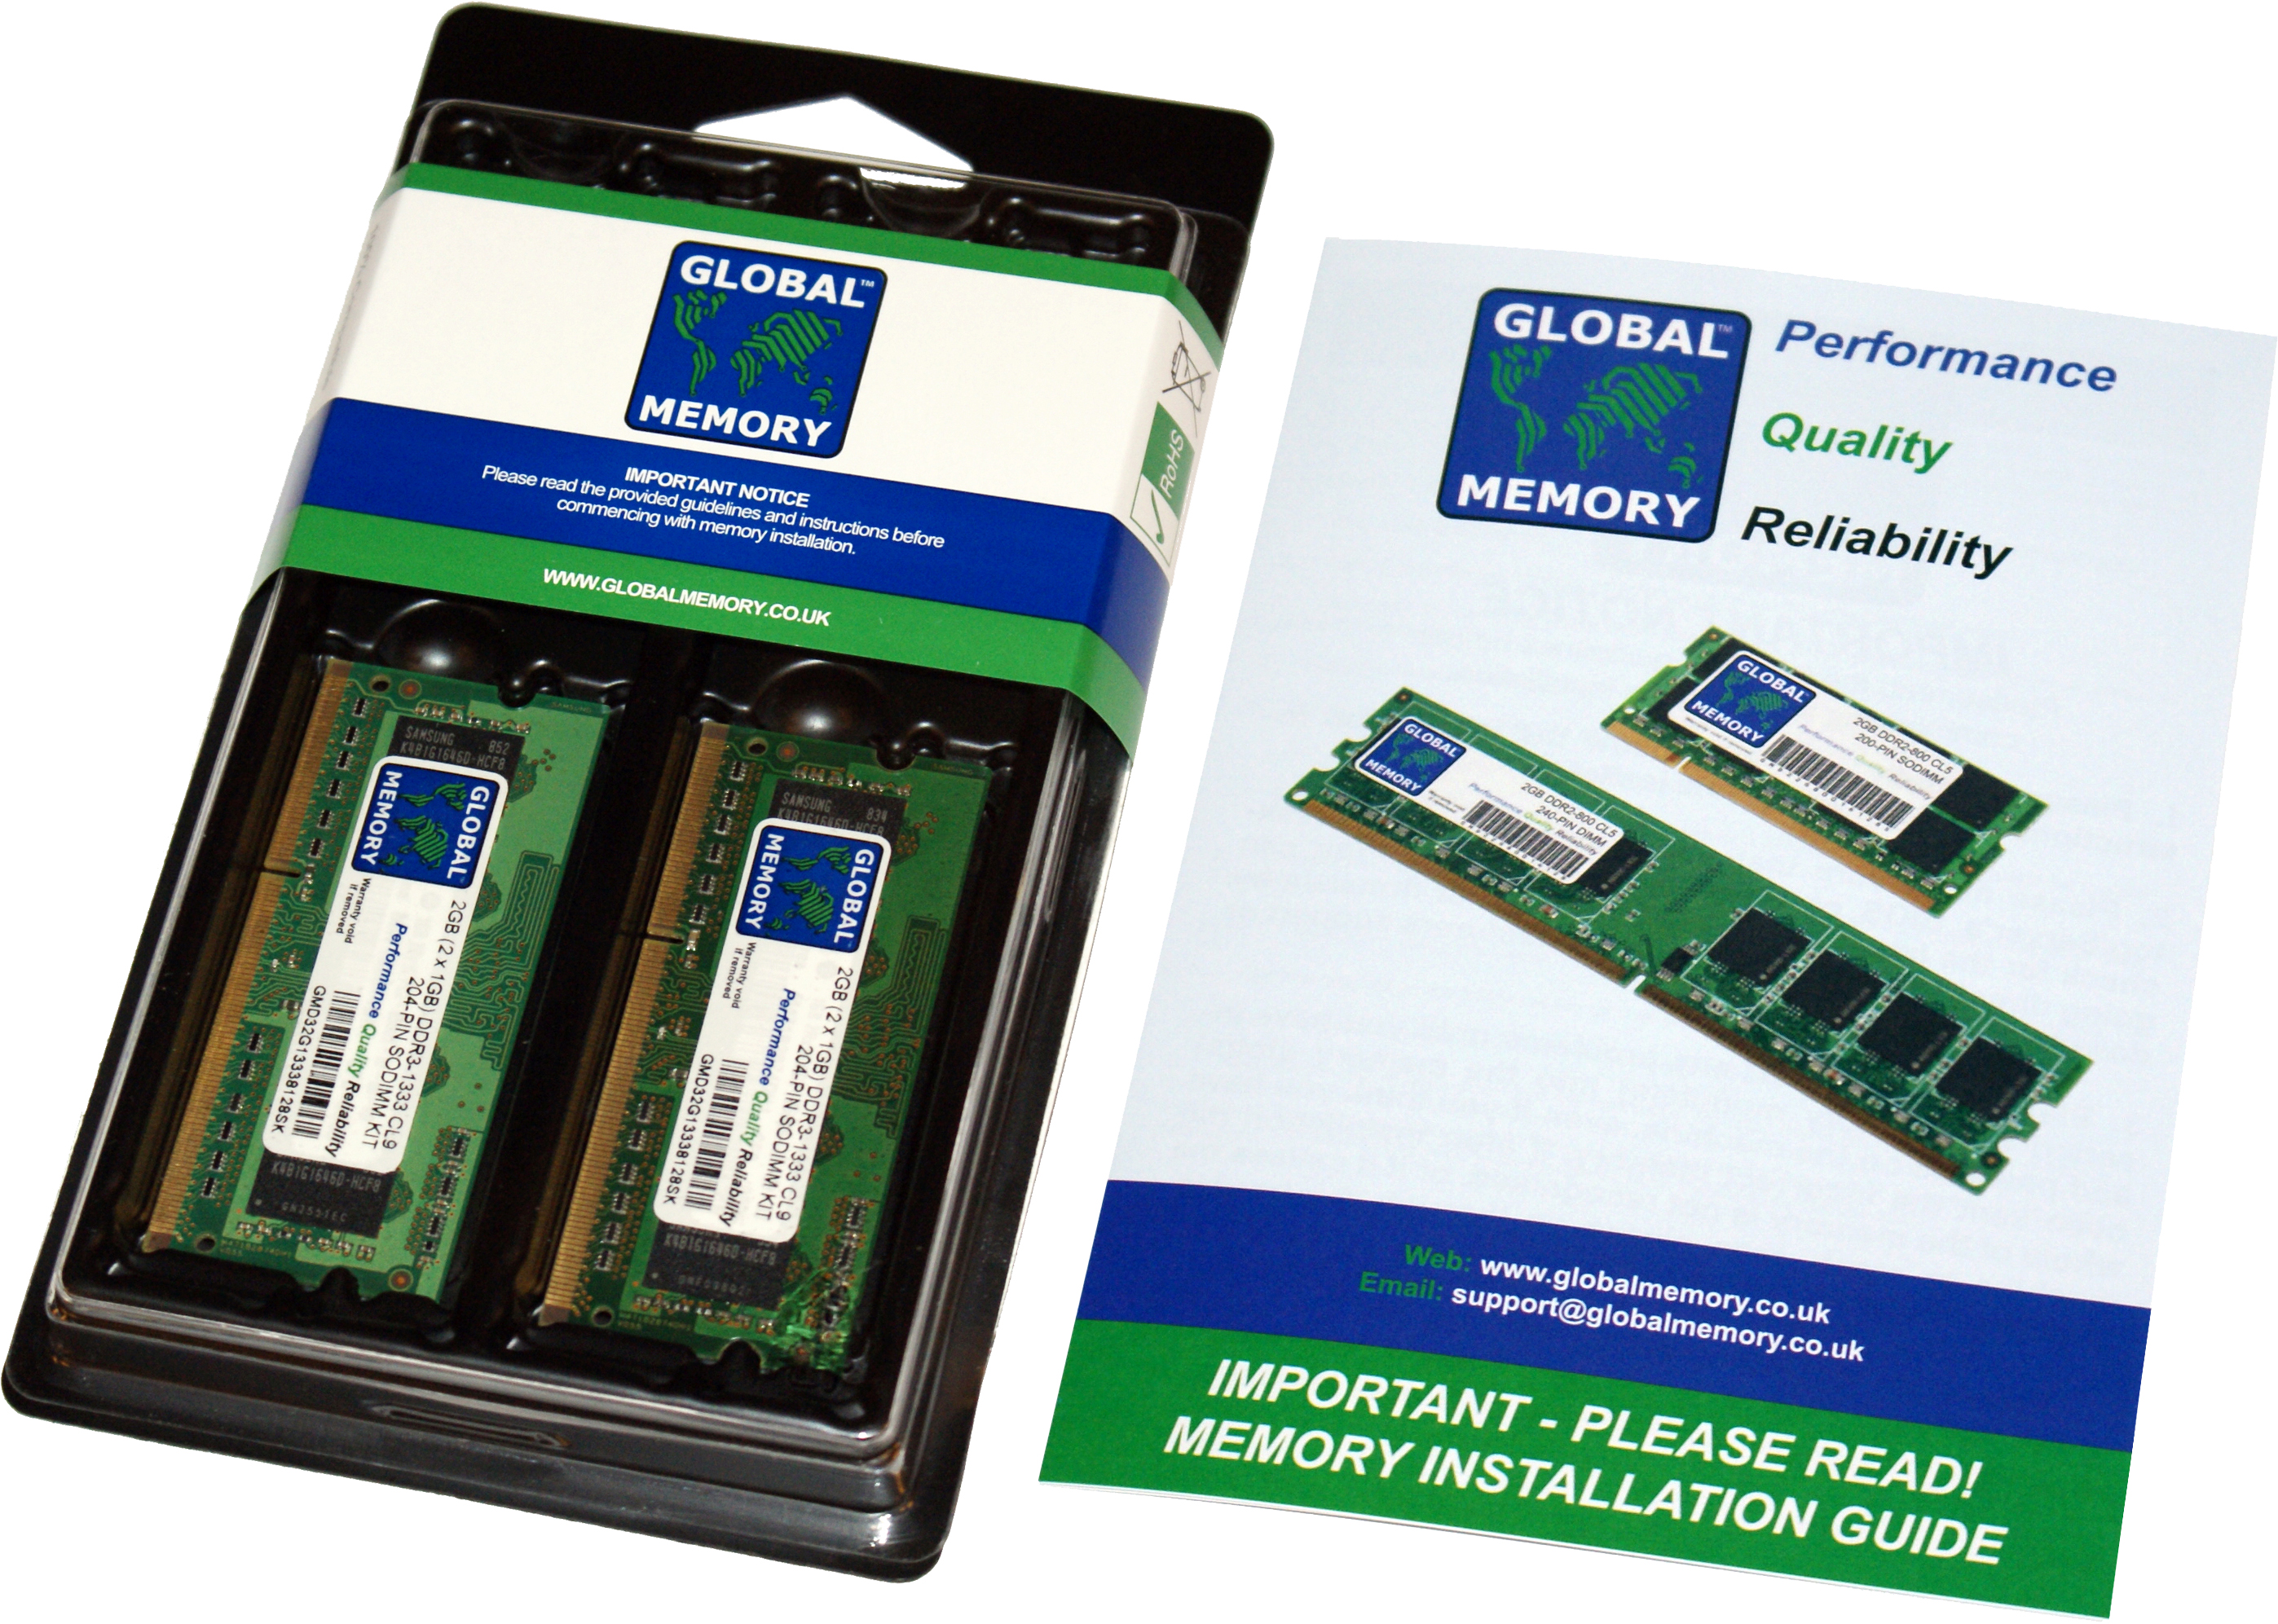 16GB (2 x 8GB) DDR4 2933MHz PC4-23400 260-PIN SODIMM MEMORY RAM KIT FOR DELL LAPTOPS/NOTEBOOKS